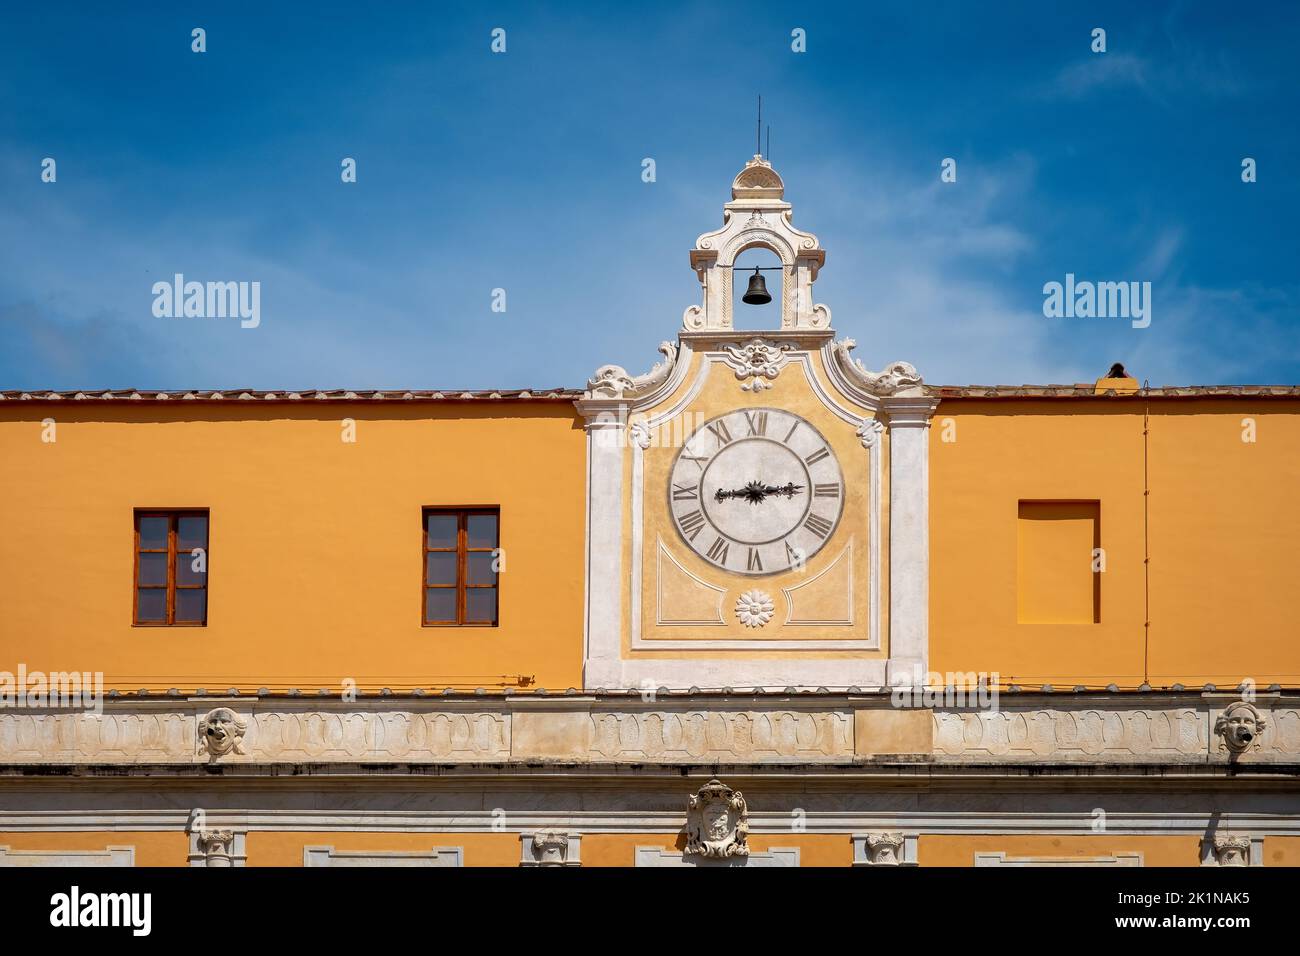 Pisa, Italy - June 8, 2022: Beautiful, ornate clock set in orange colored wall in Pisa, Italy. Stock Photo